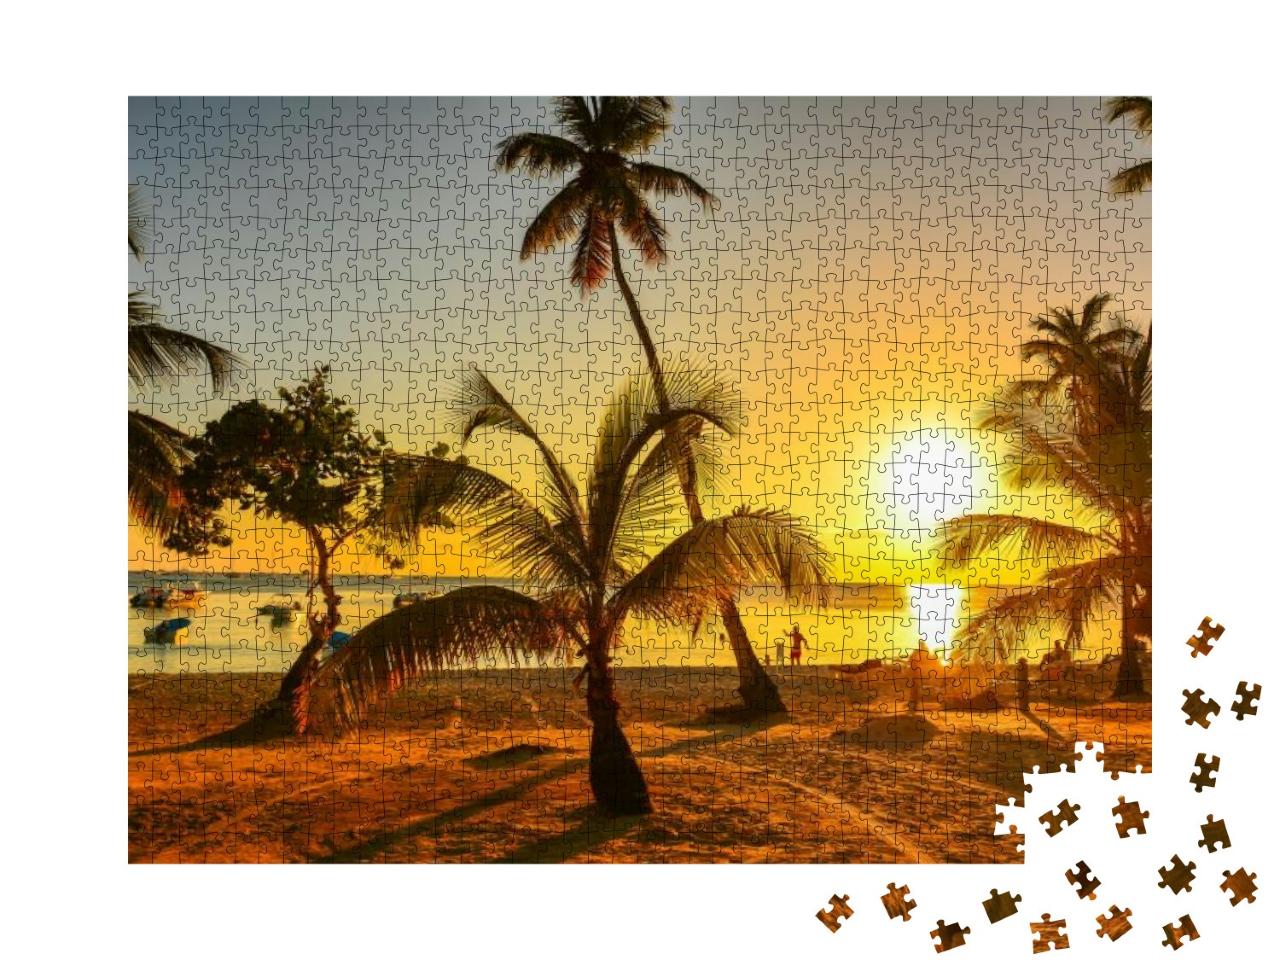 Puzzle 1000 Teile „Sonnenuntergang in der Karibik, Dominikanische Republik“